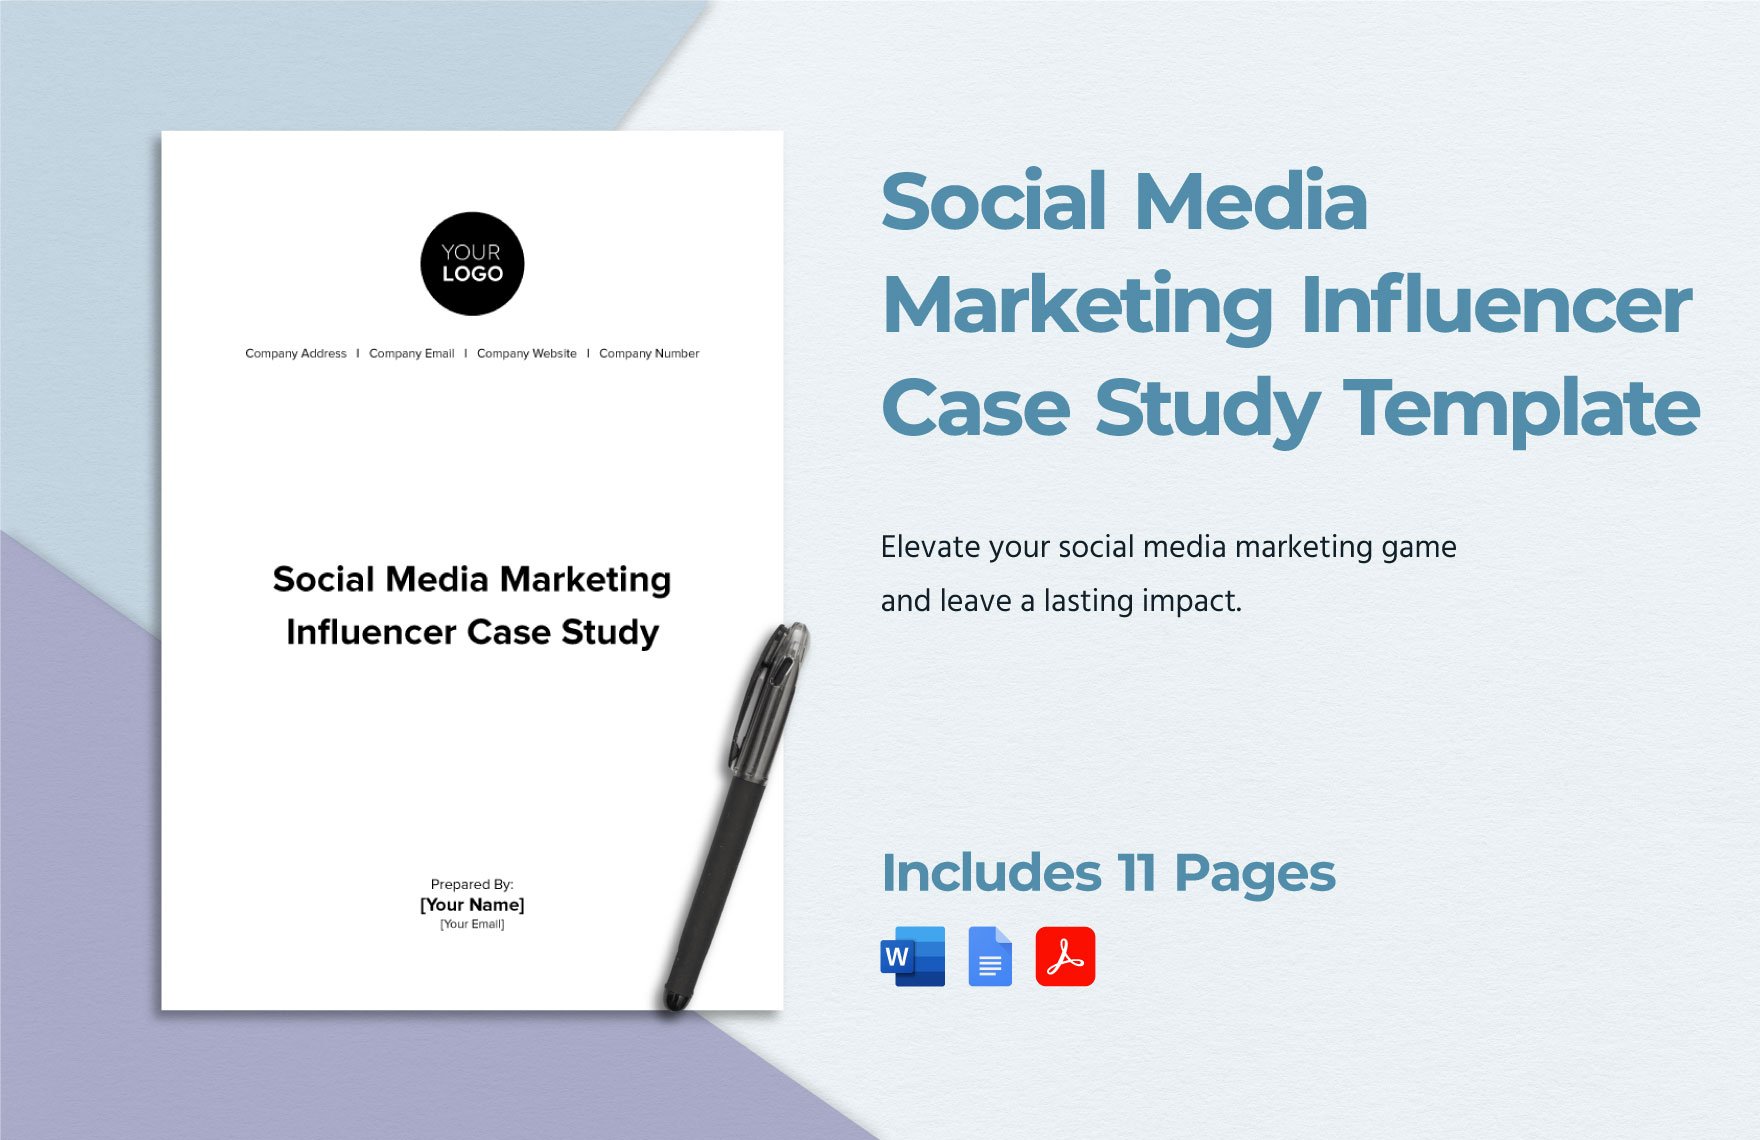 Social Media Marketing Influencer Case Study Template in Word, Google Docs, PDF